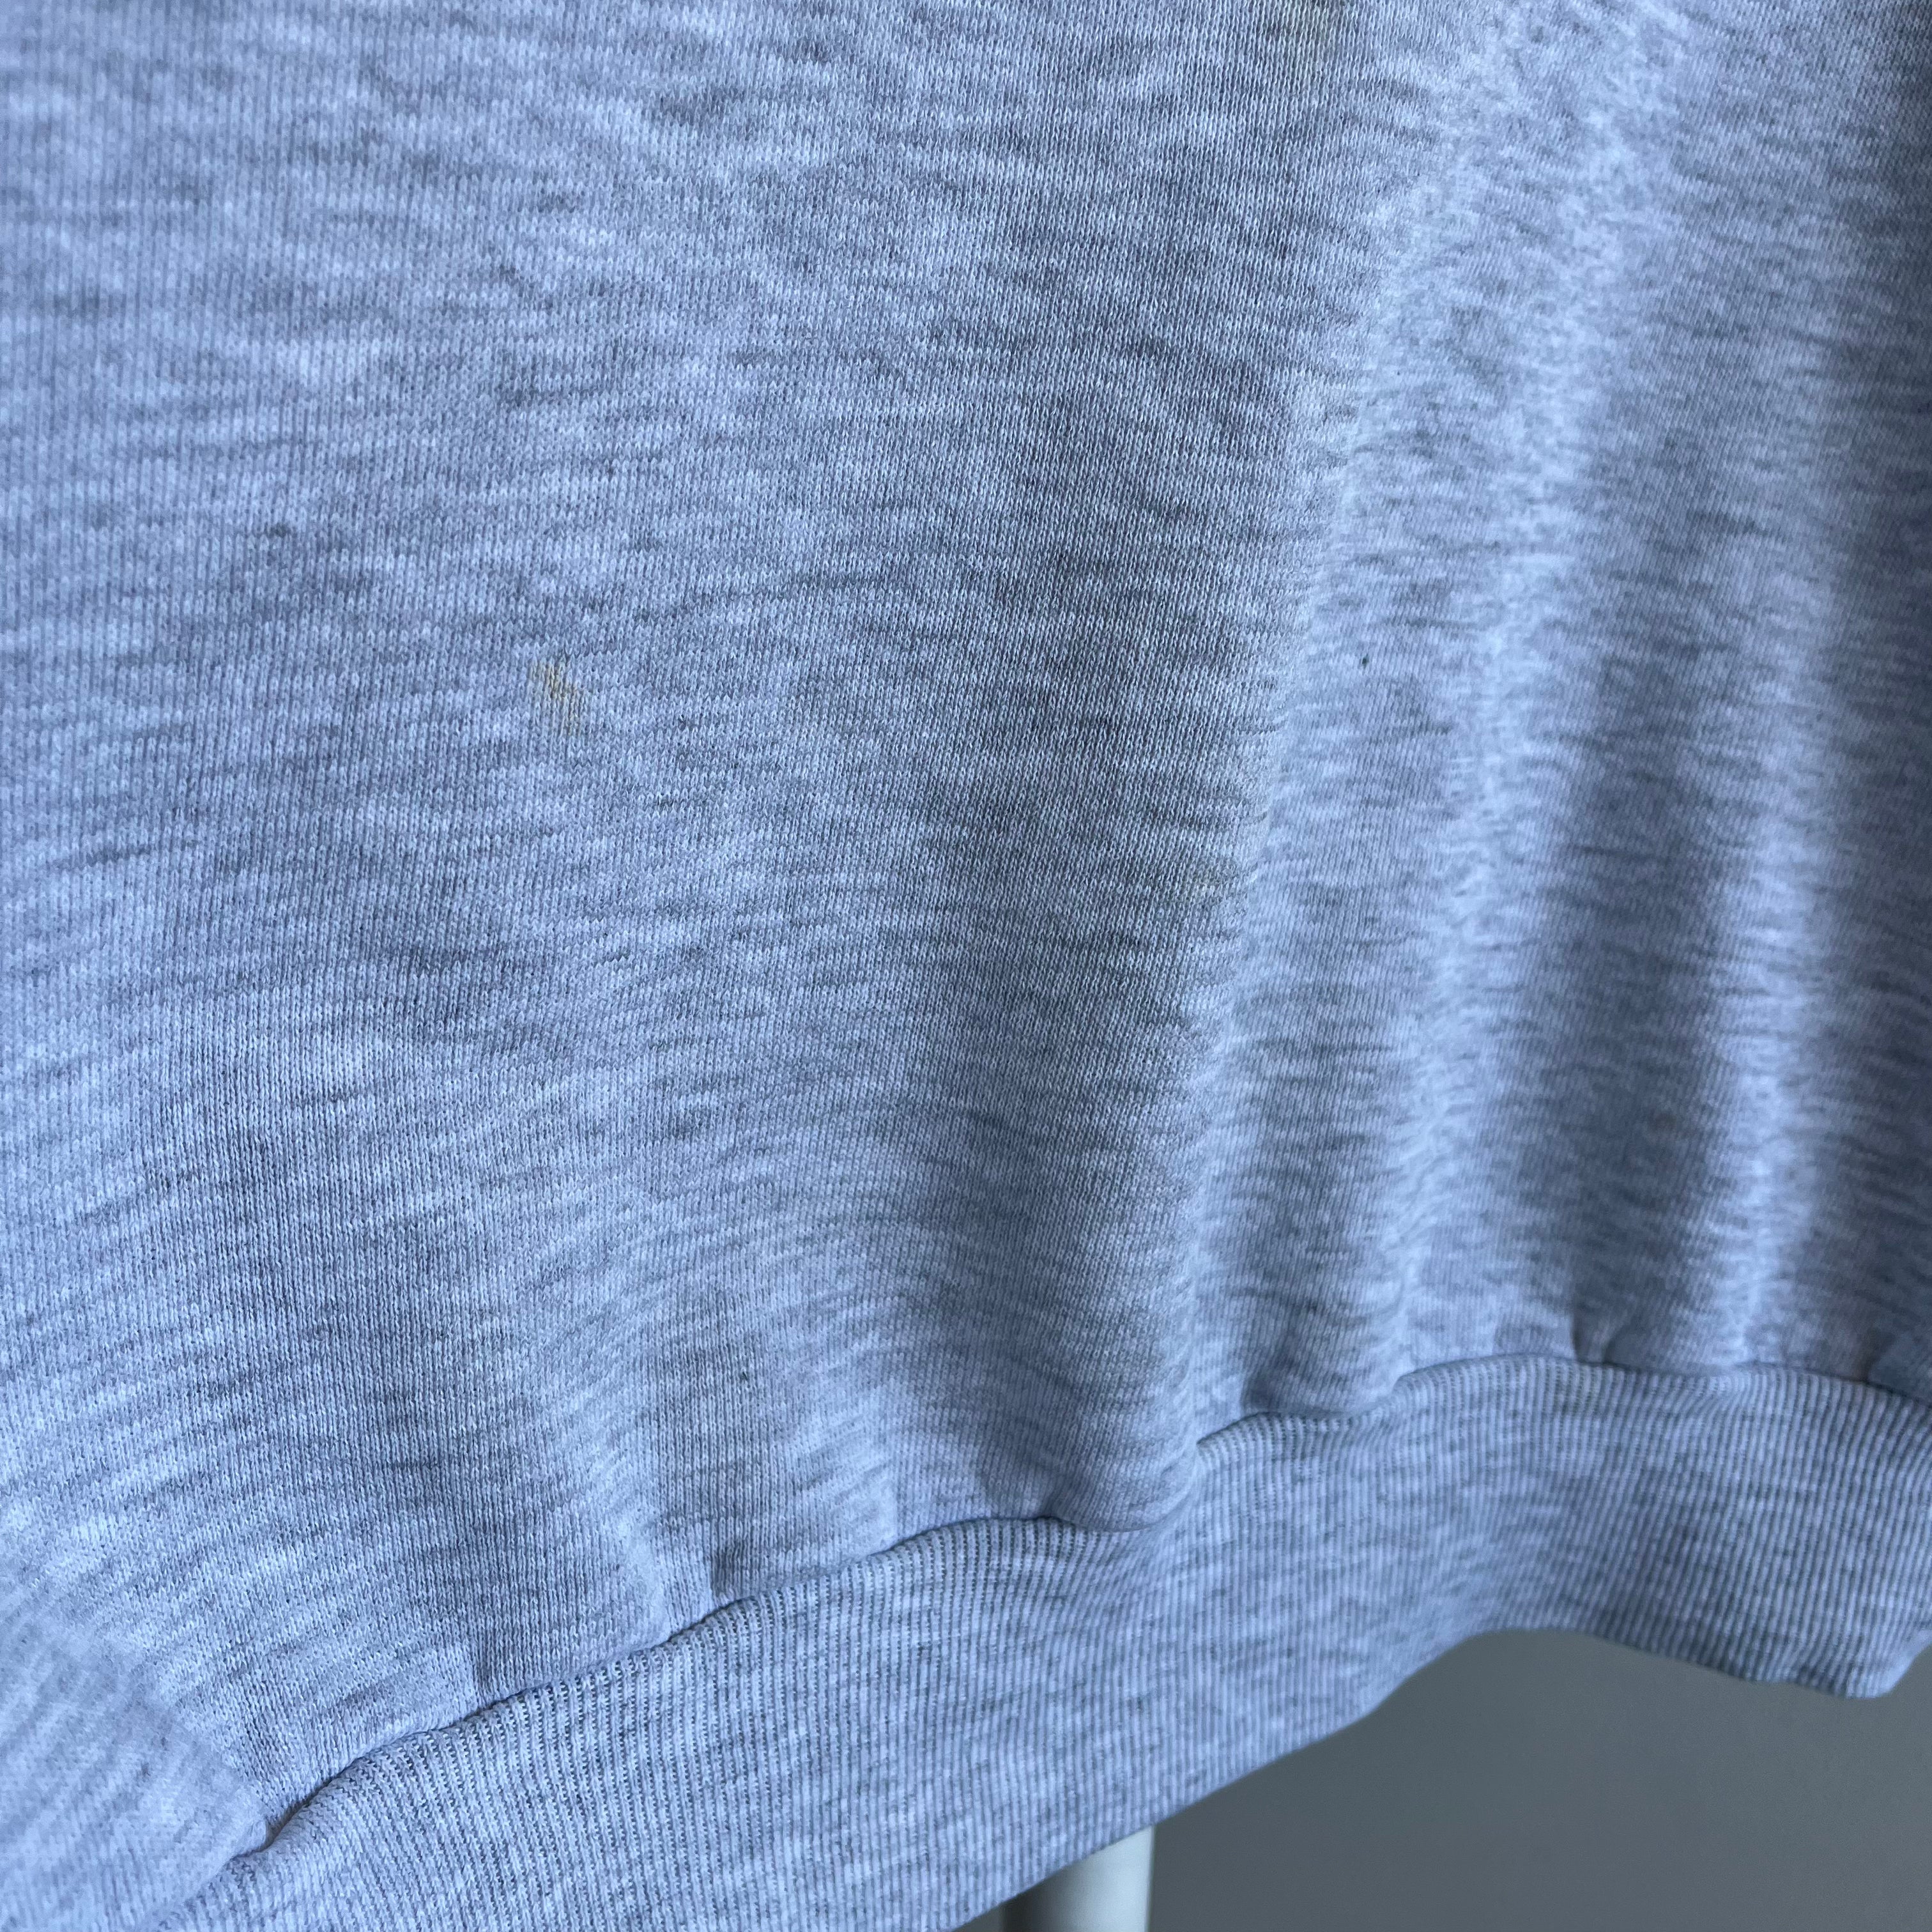 1980s SHredded Collar Blank Gray Sweatshirt by Jerzees